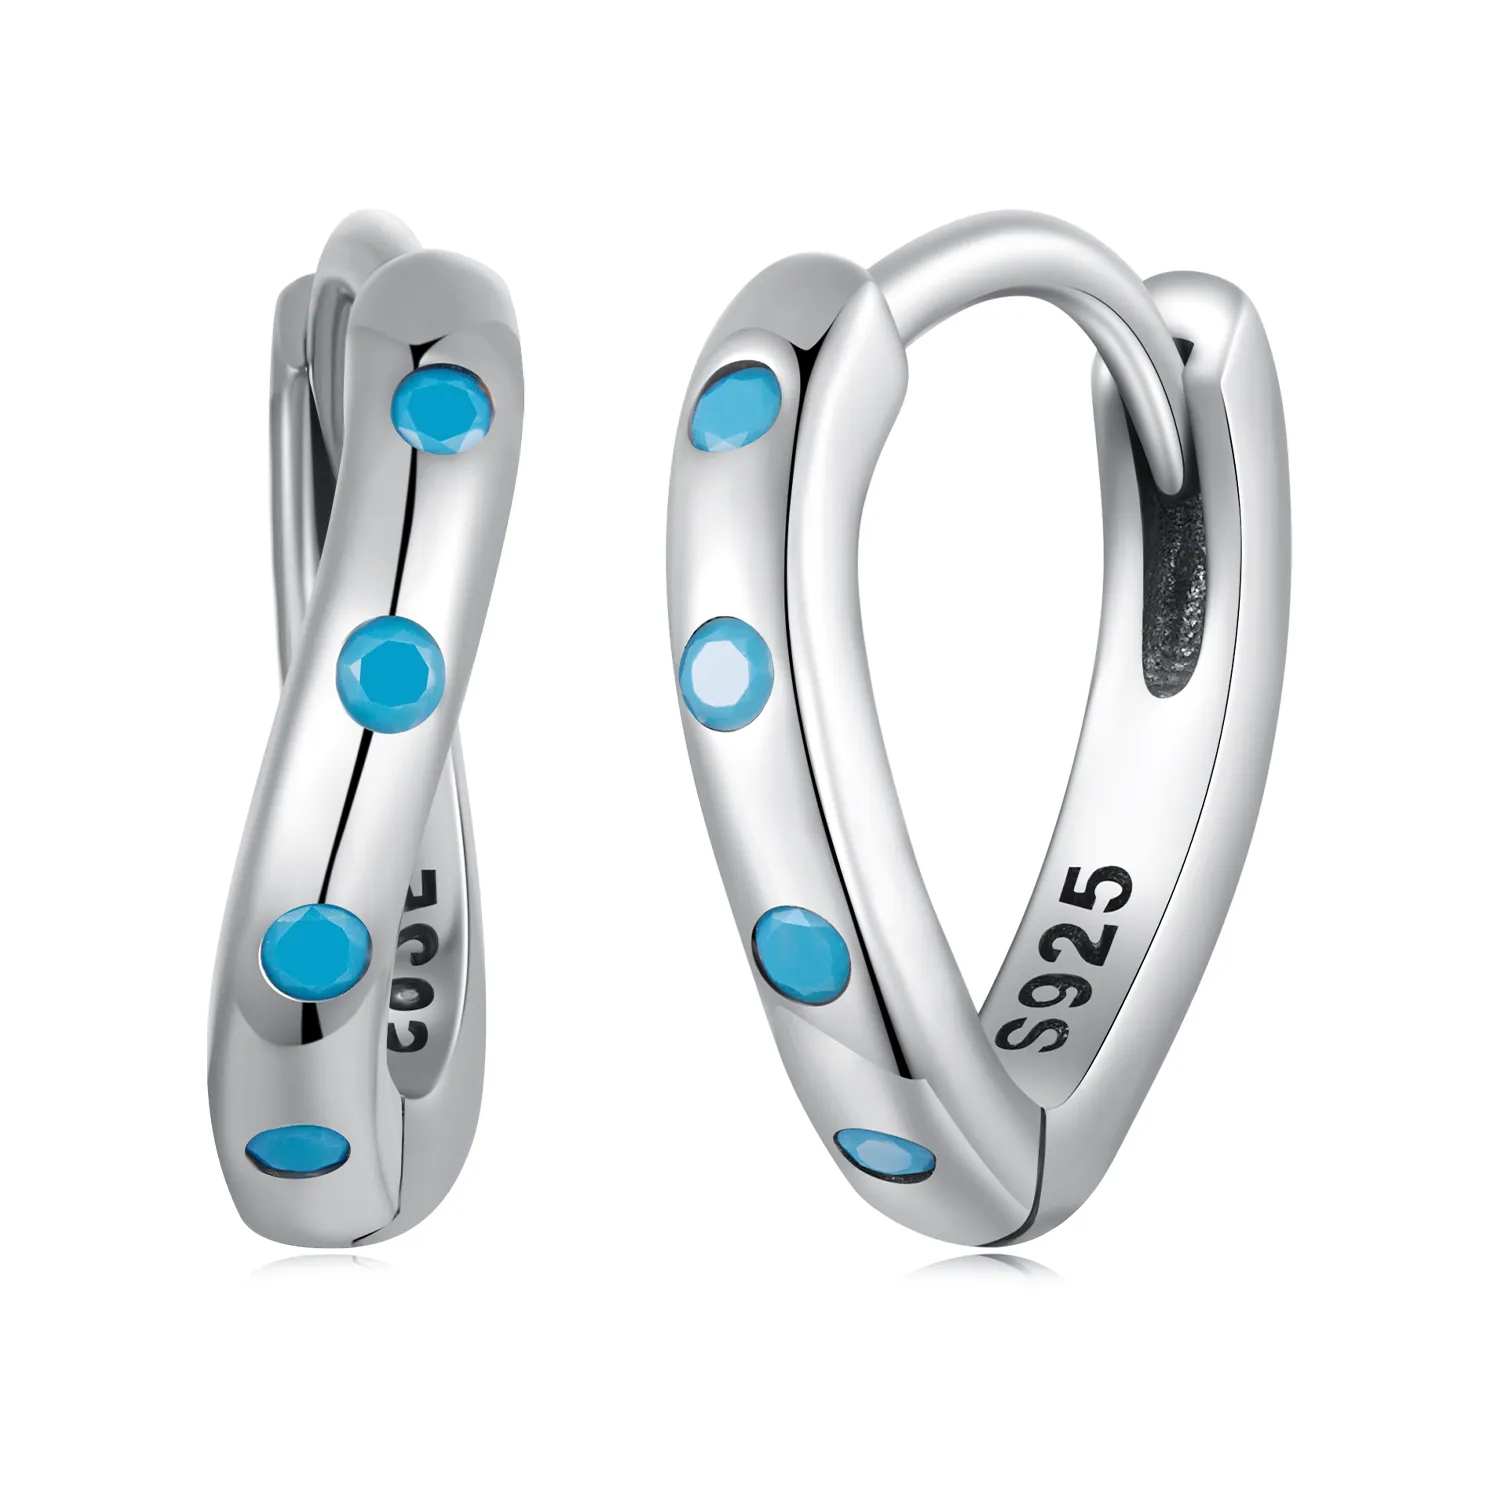 Pandora Style Wave Hoops Earrings - SCE1593